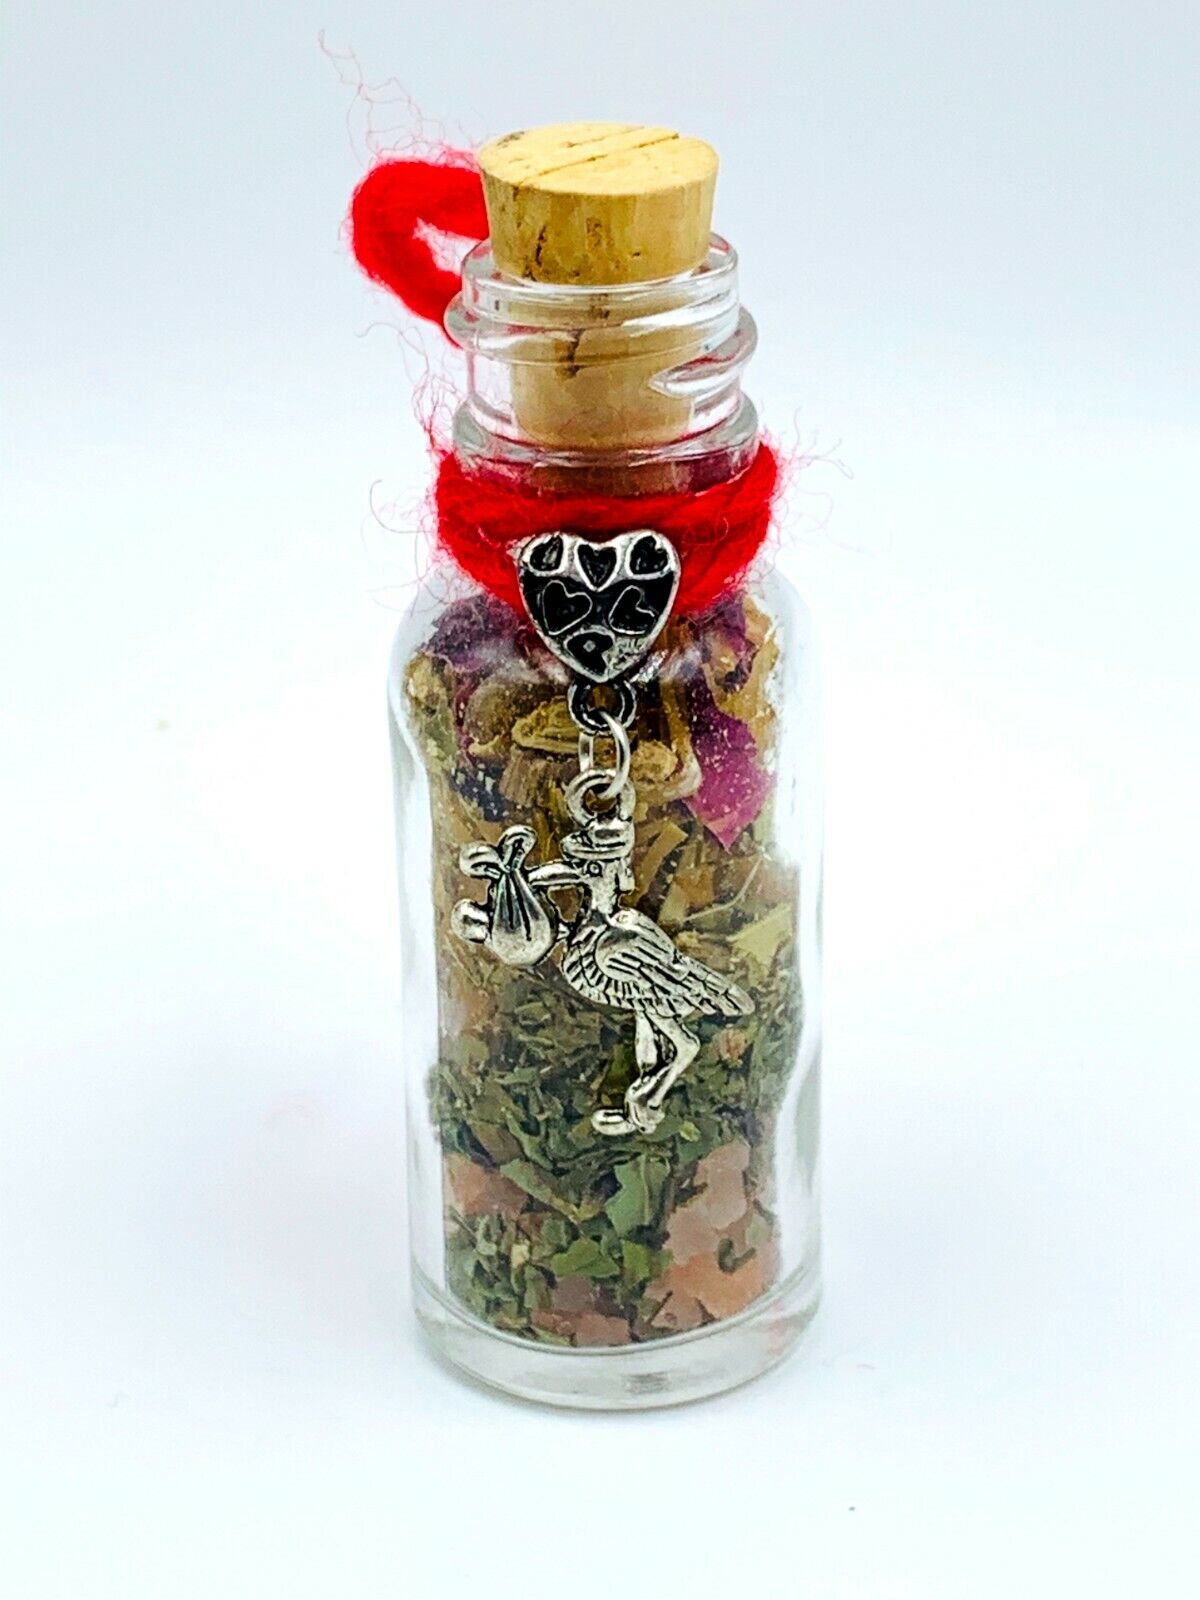 MIRACLE BABY Spell Jar/Powerful Wishing Manifestation Bottle/ Best Spells Magick